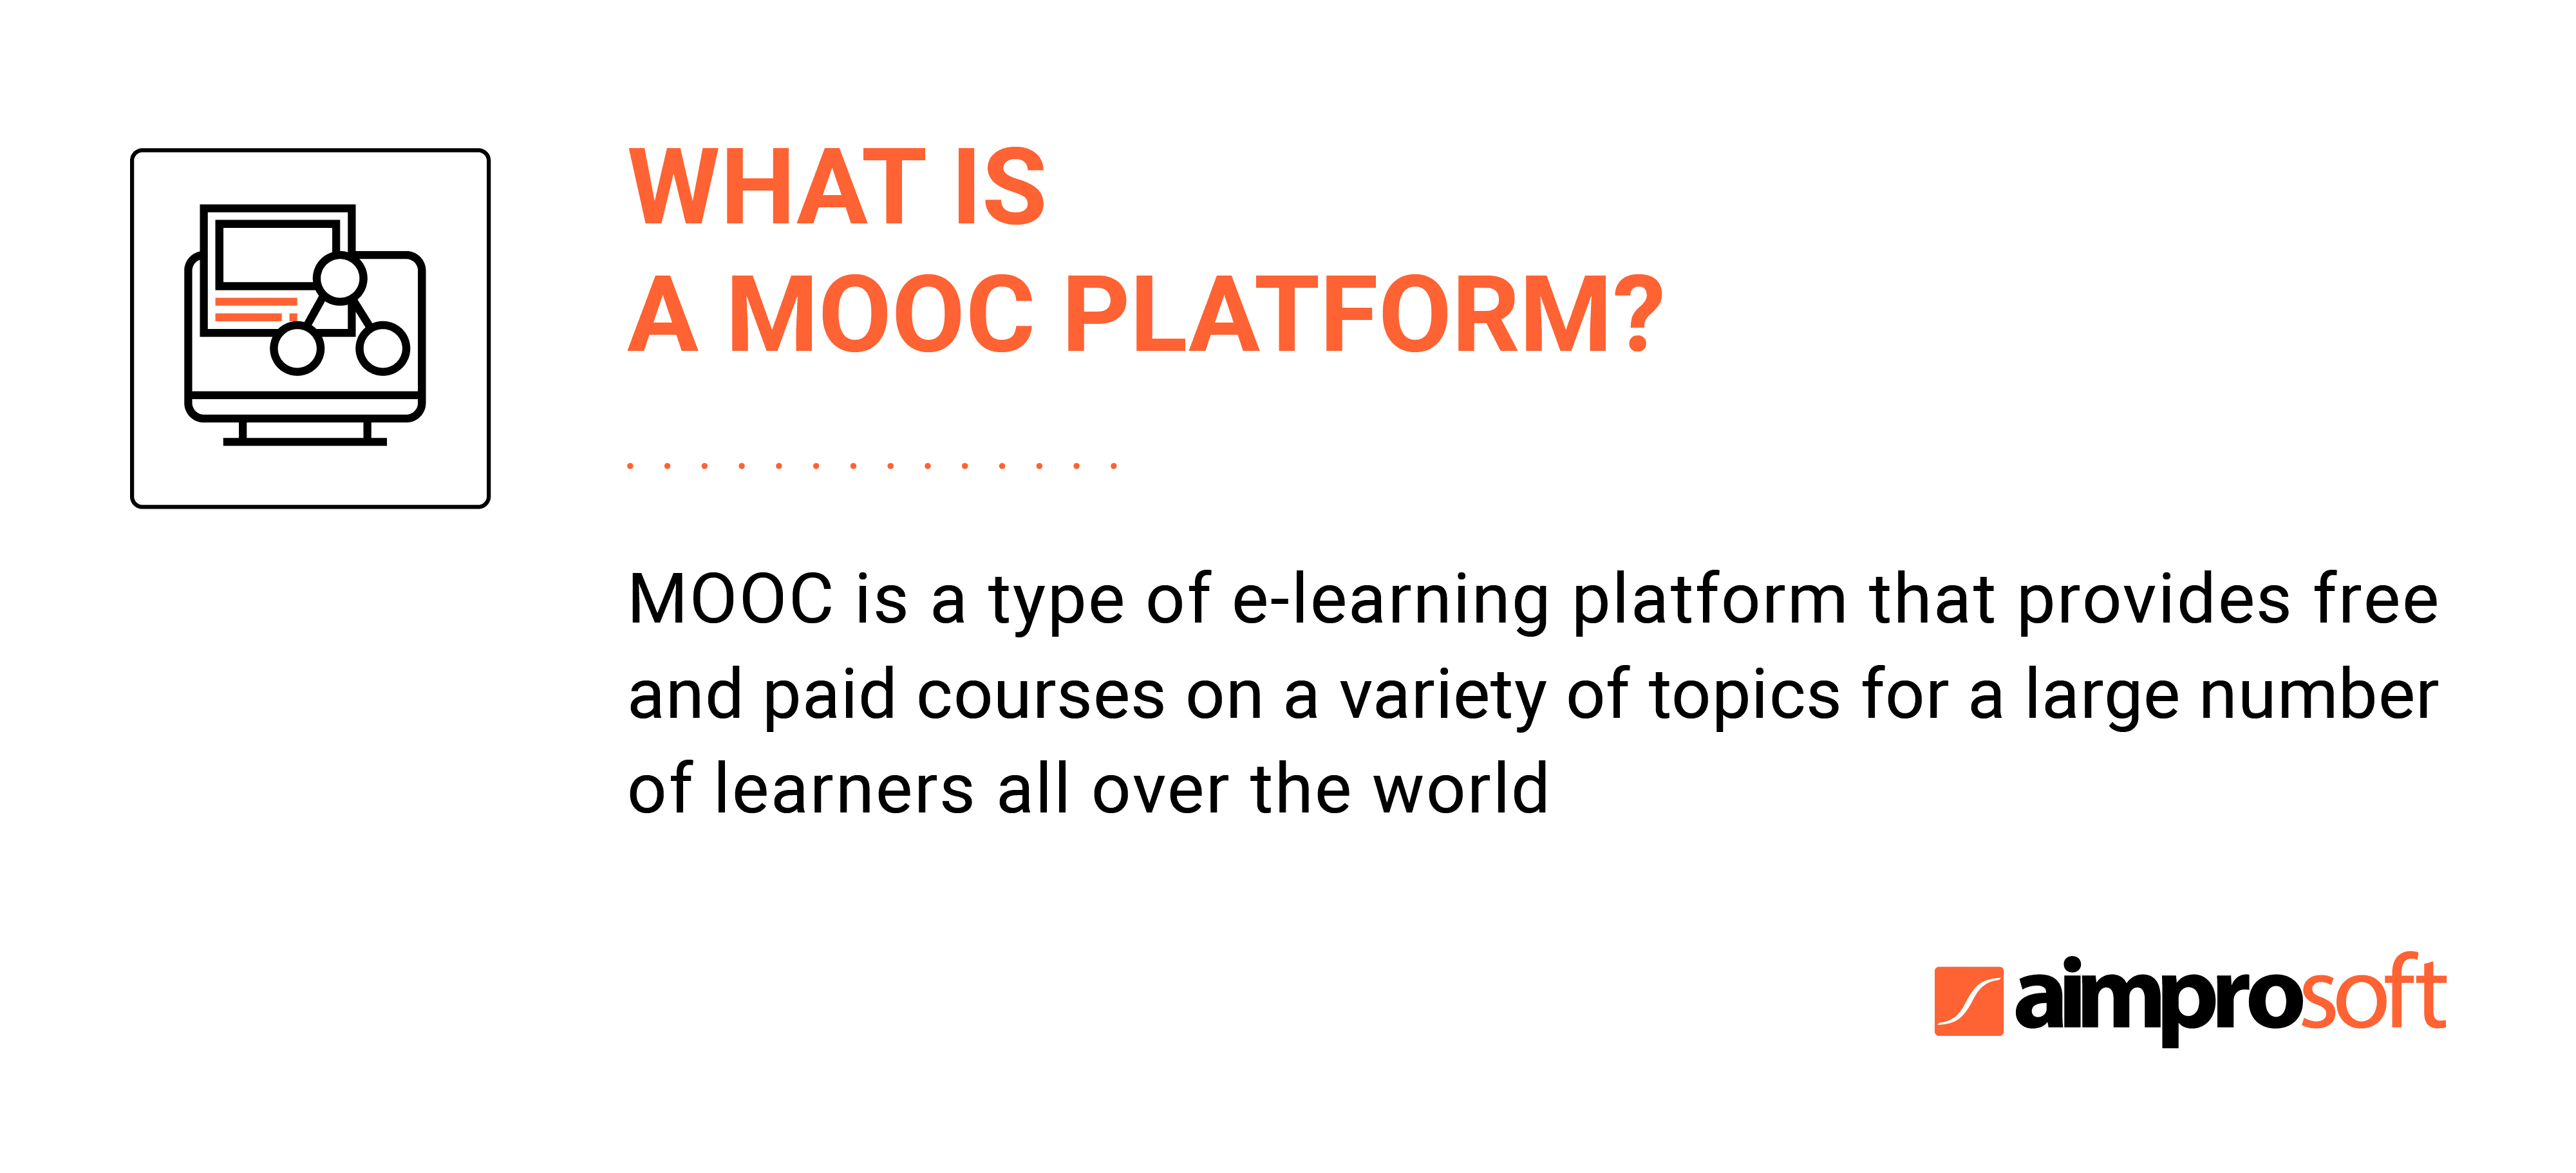 The essence of a MOOC platform